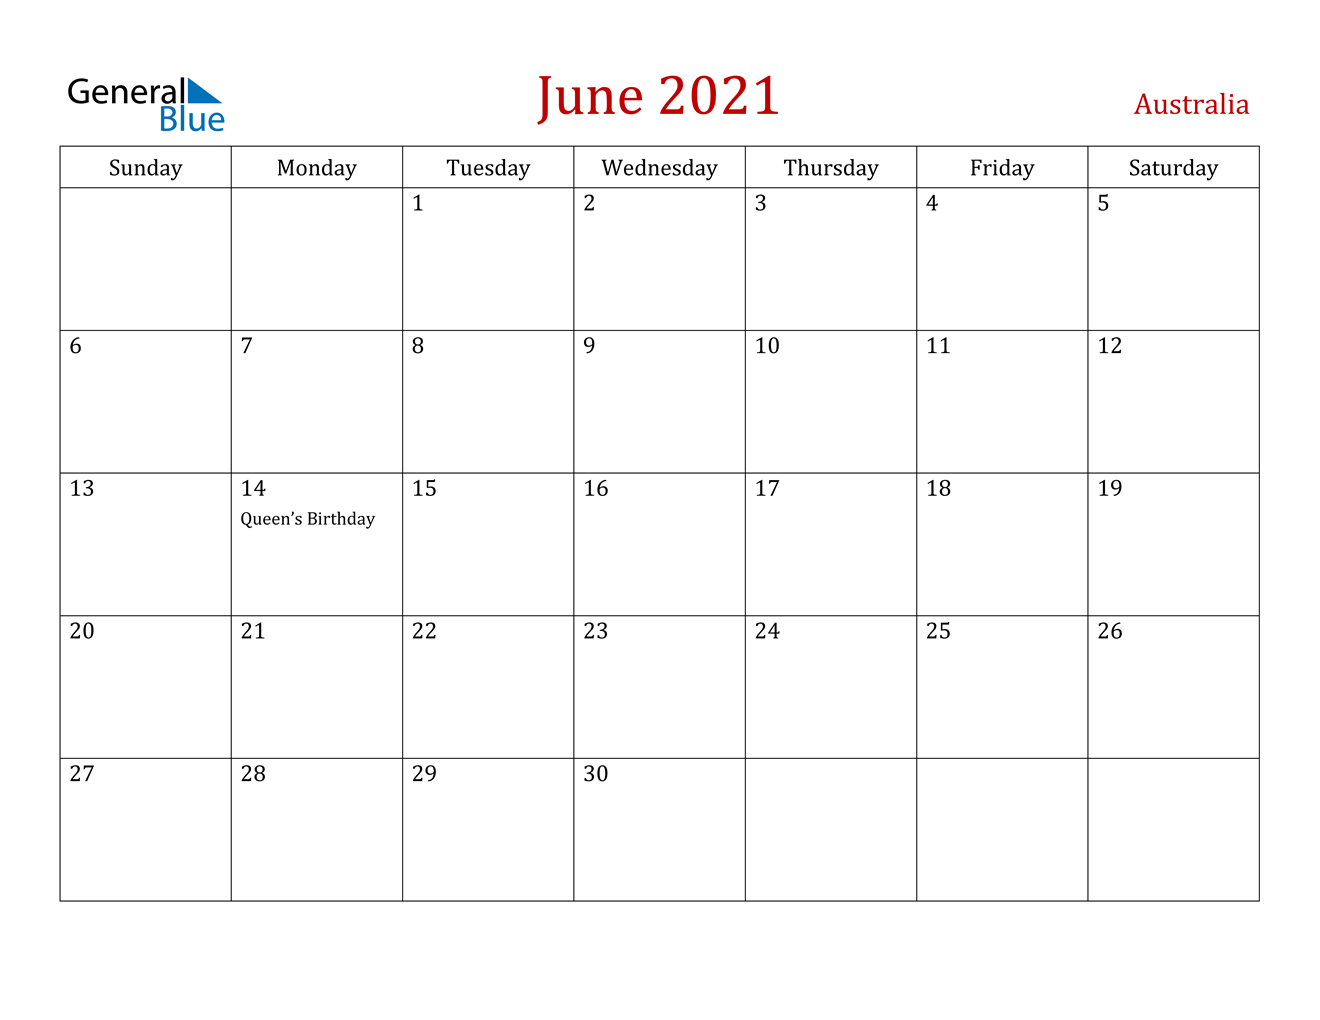 June 2021 Calendar - Australia